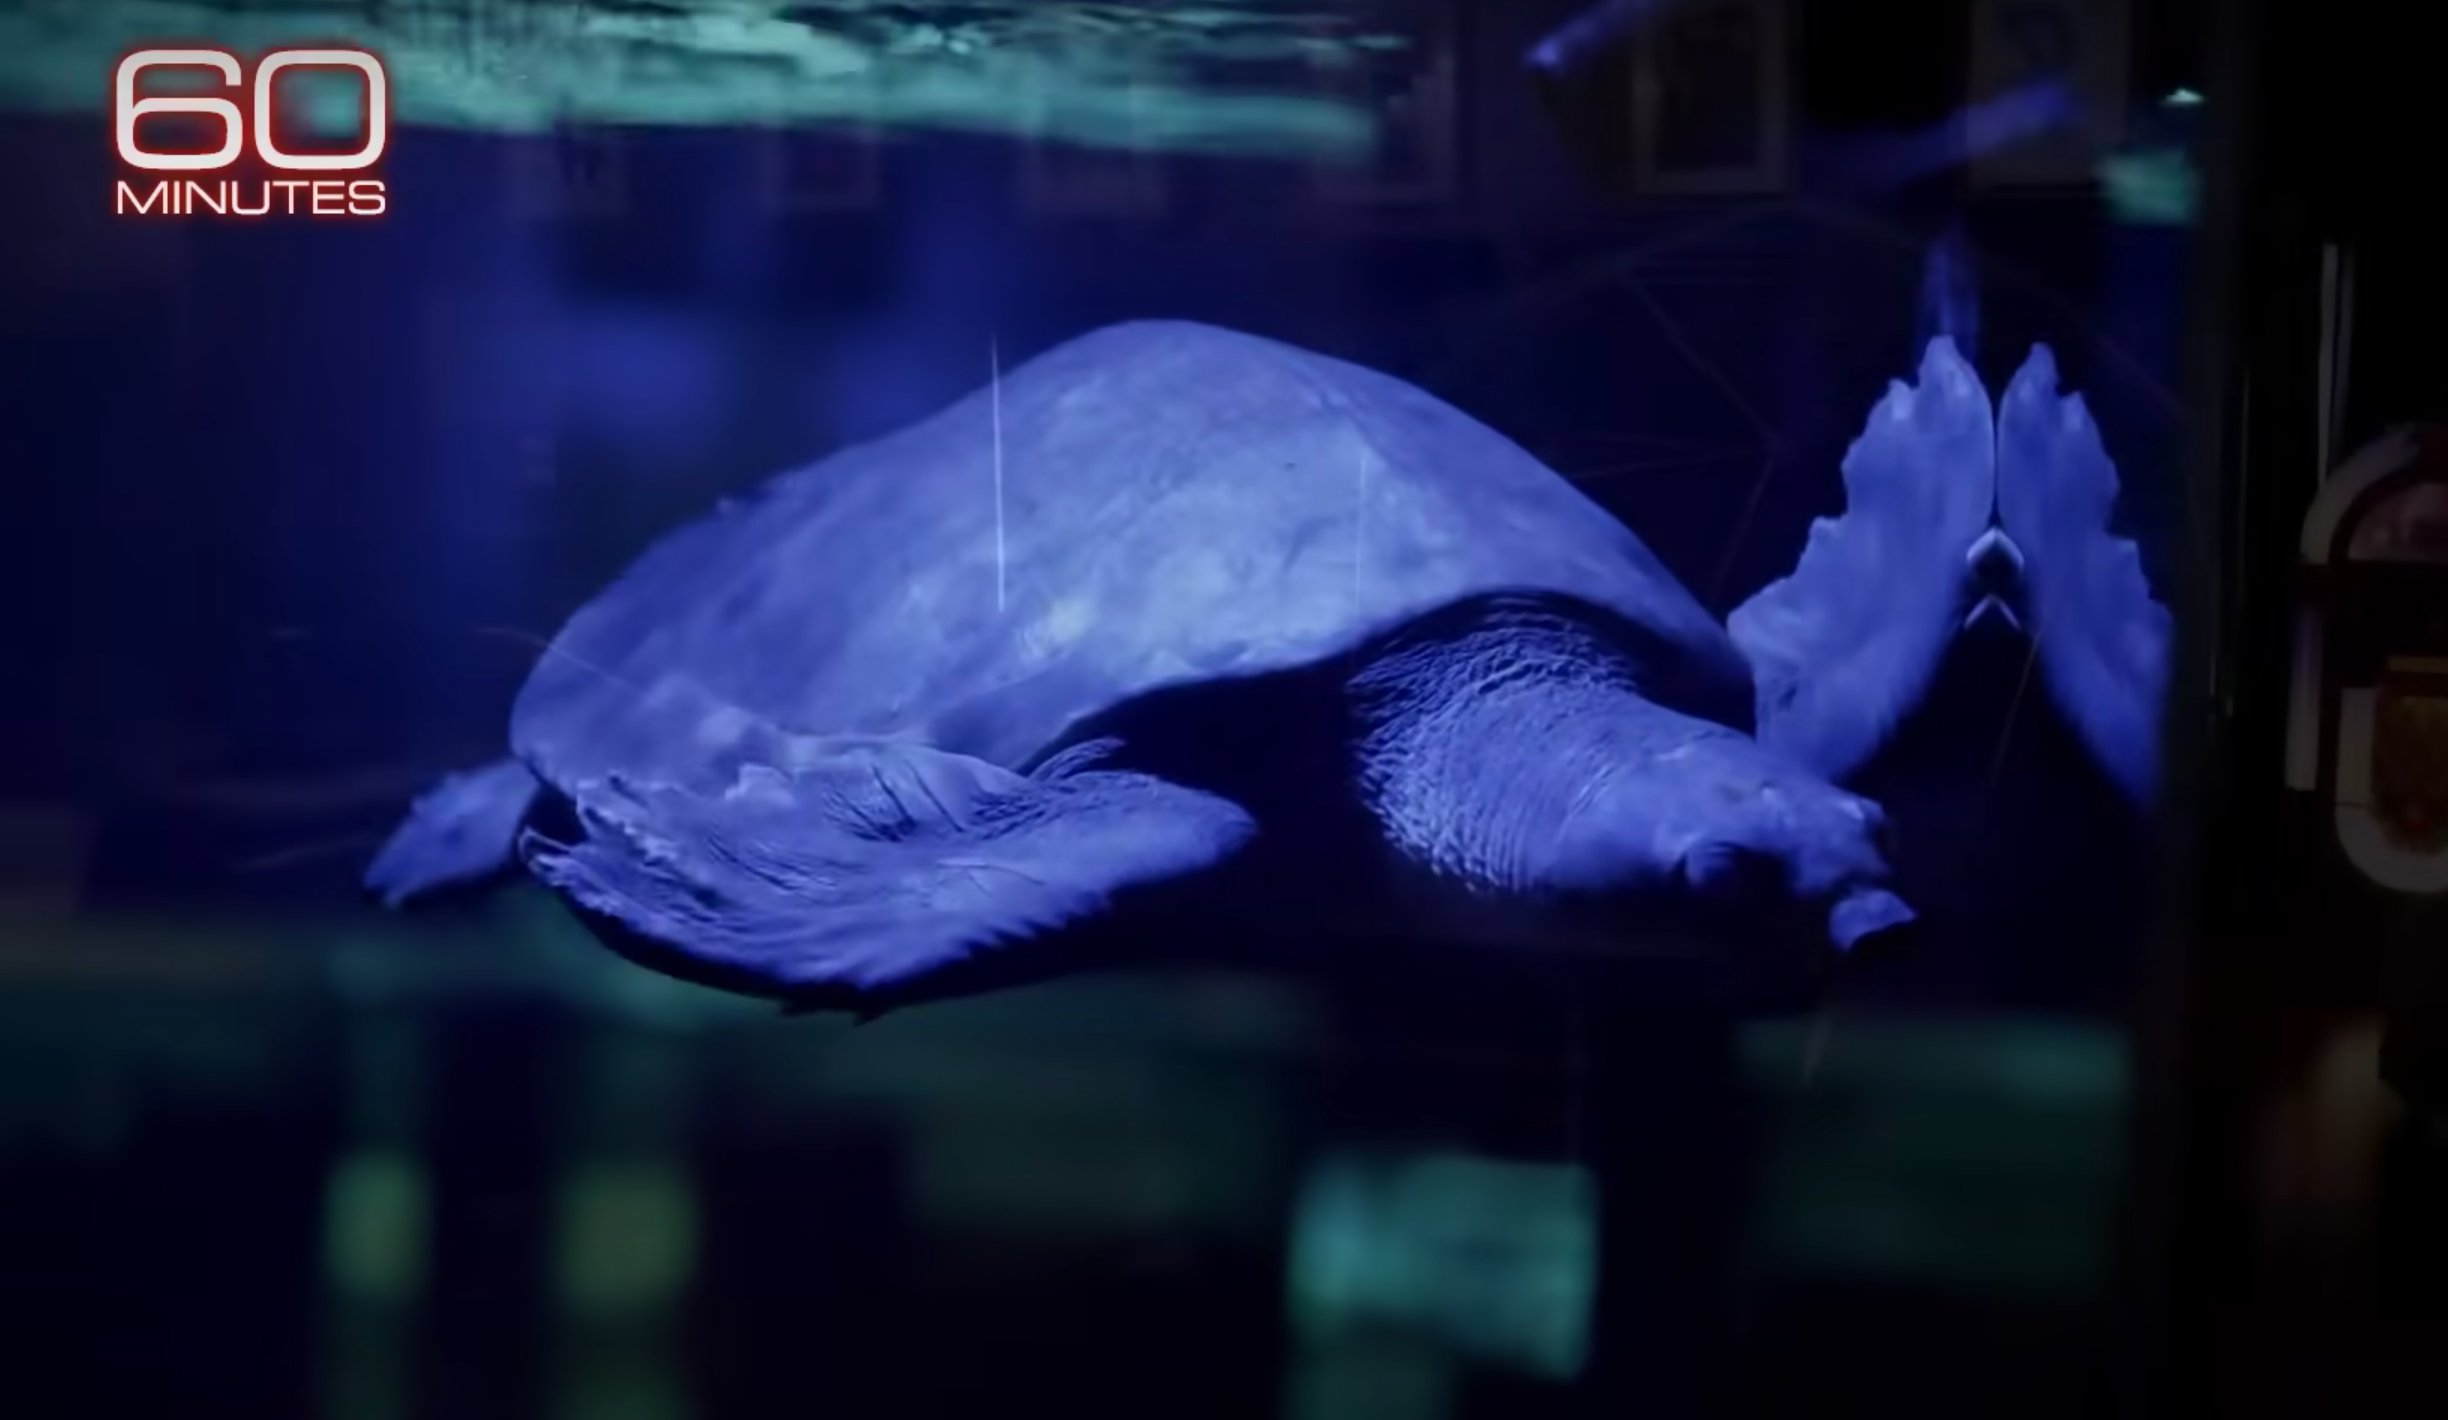 Cage's sea turtle inside an aquarium. | Source: YouTube.com/60 Minutes 